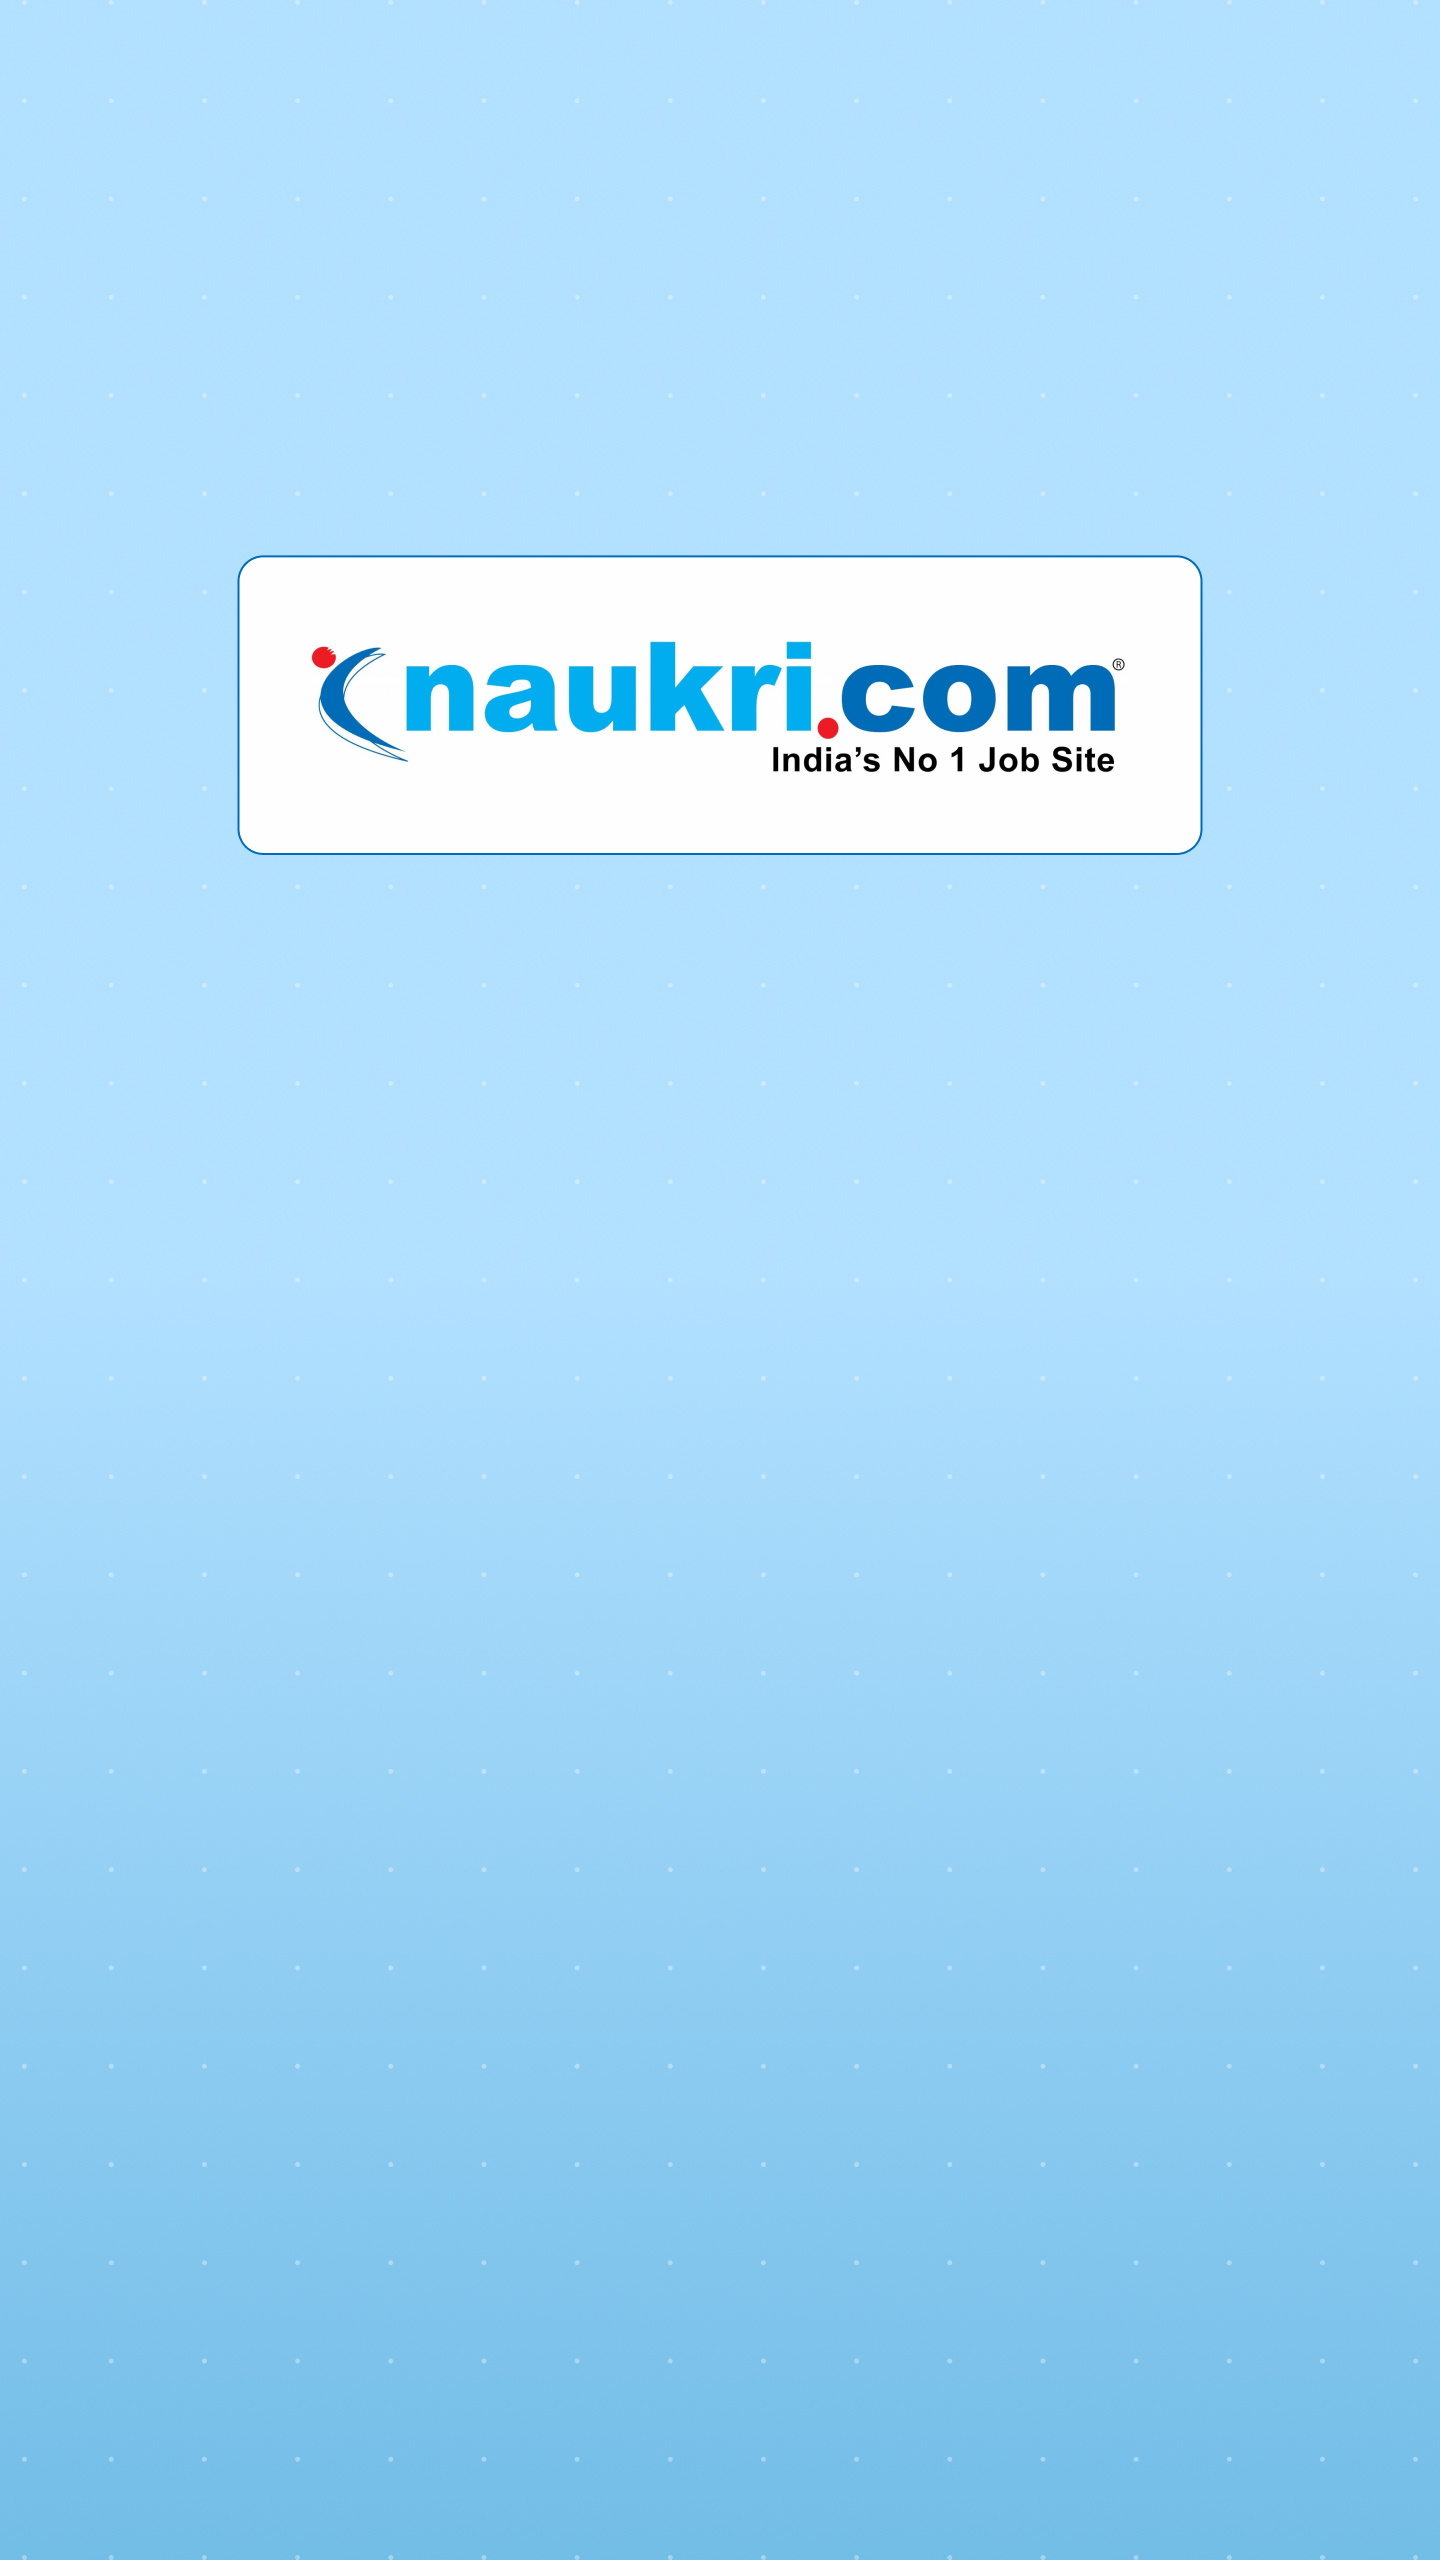 Naukri.com in Mumbai - Best Online Placement Services in Mumbai - Justdial